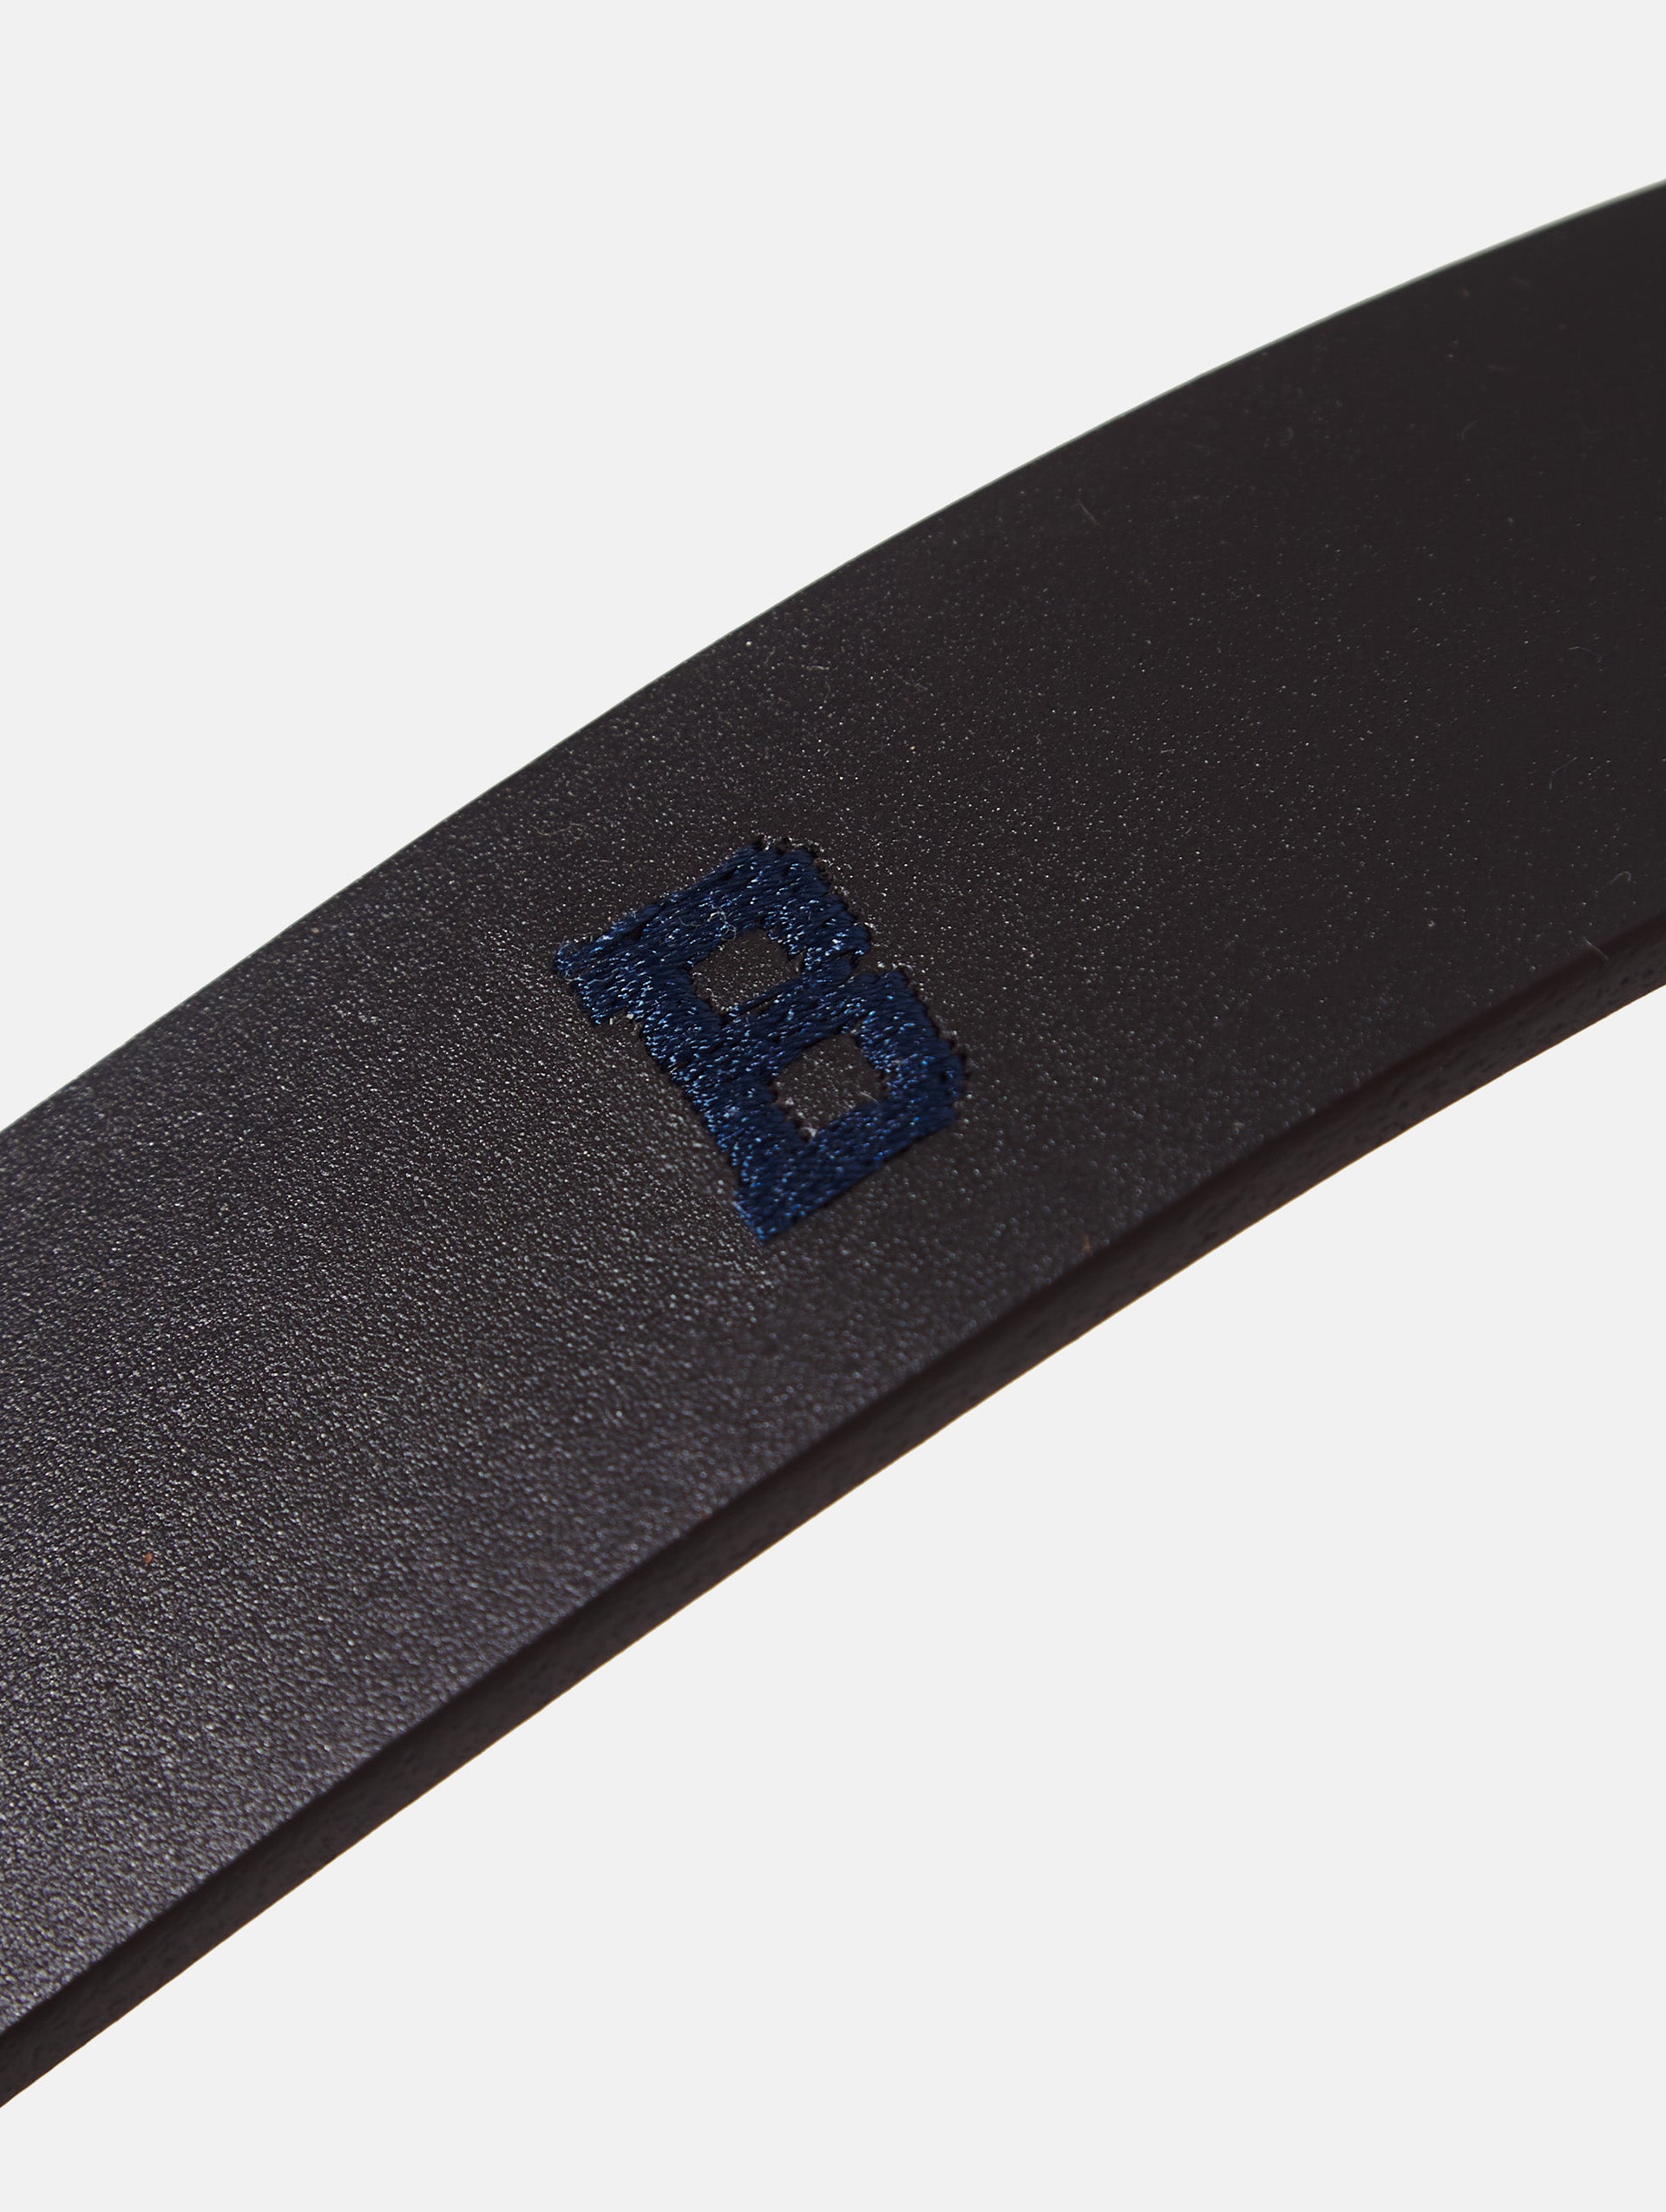 Colored SB leather belt